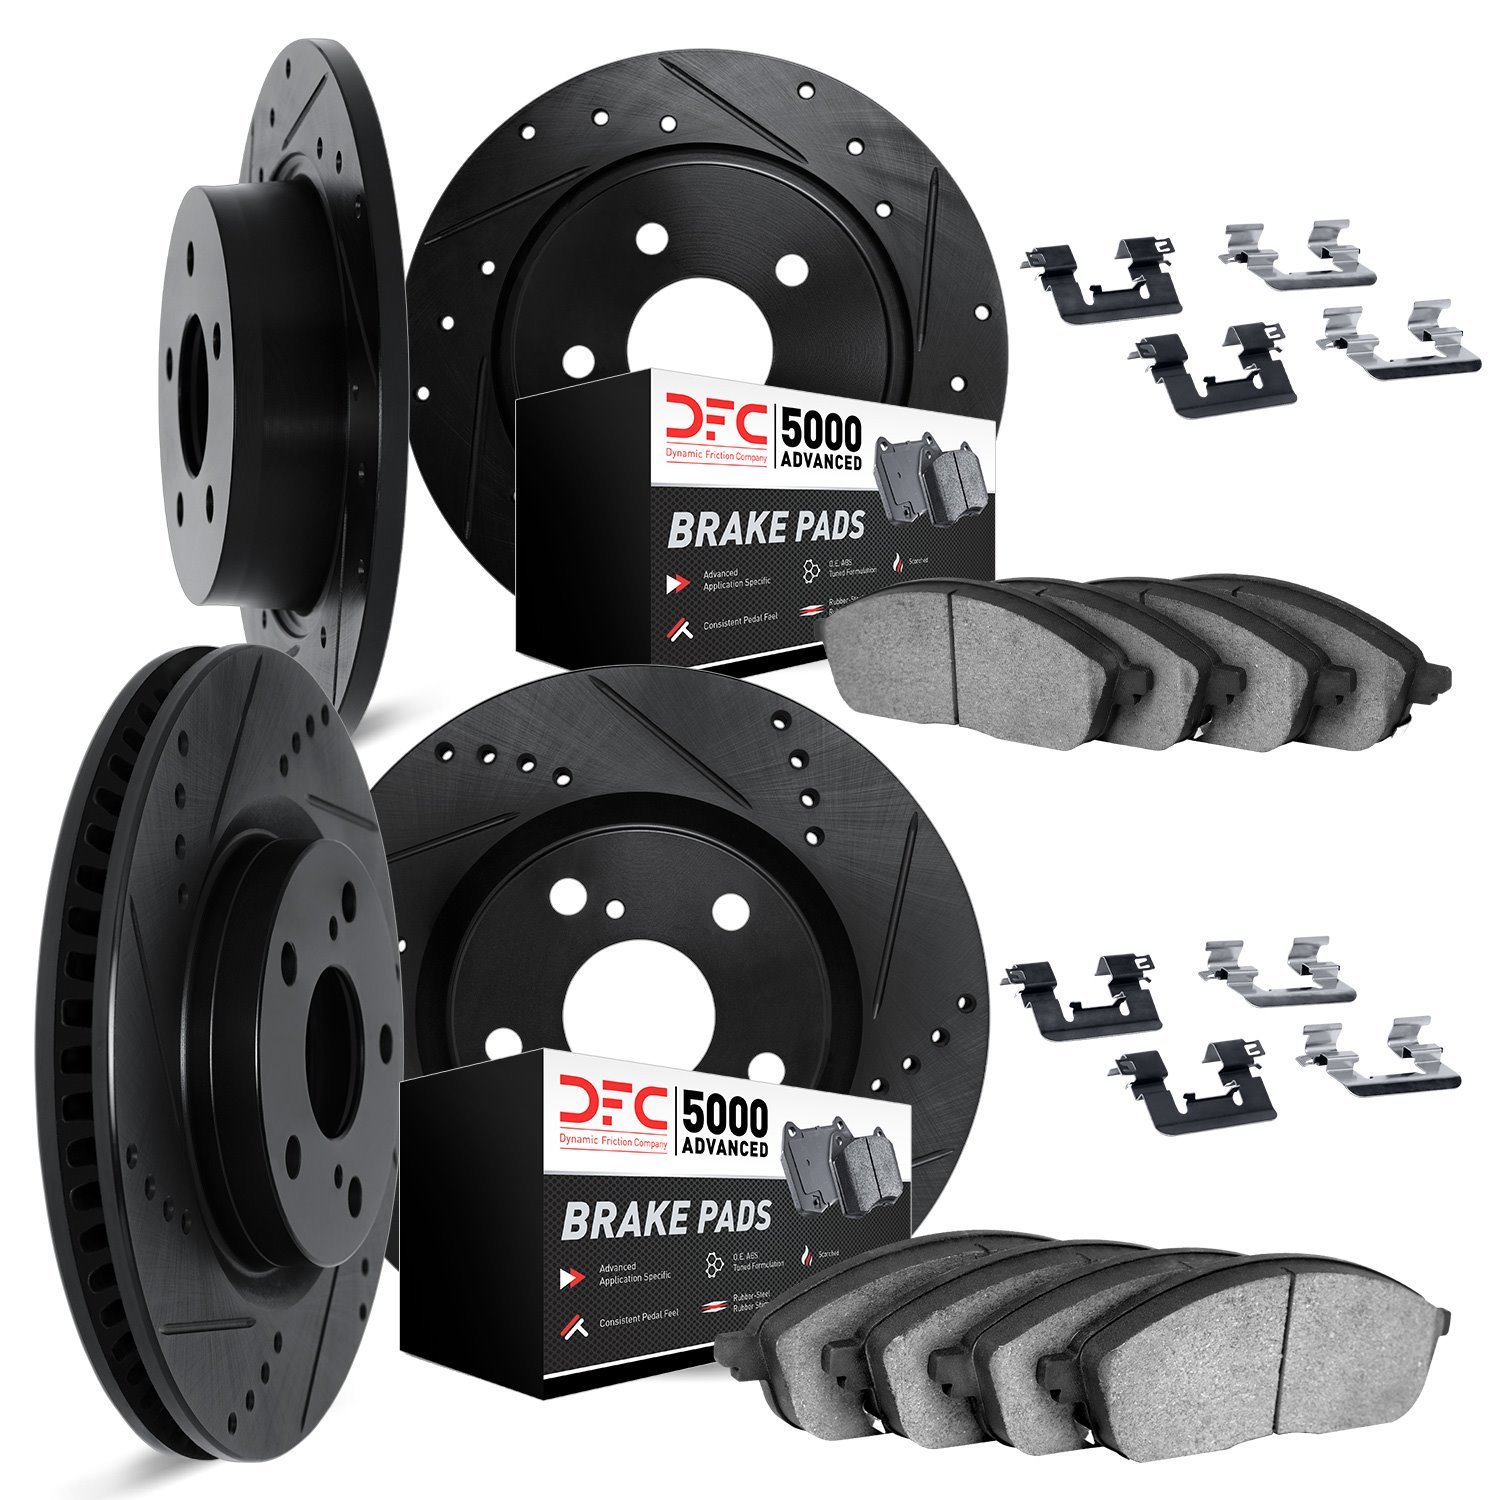 8514-40258 Drilled/Slotted Brake Rotors w/5000 Advanced Brake Pads Kit & Hardware [Black], 2003-2006 Mopar, Position: Front and